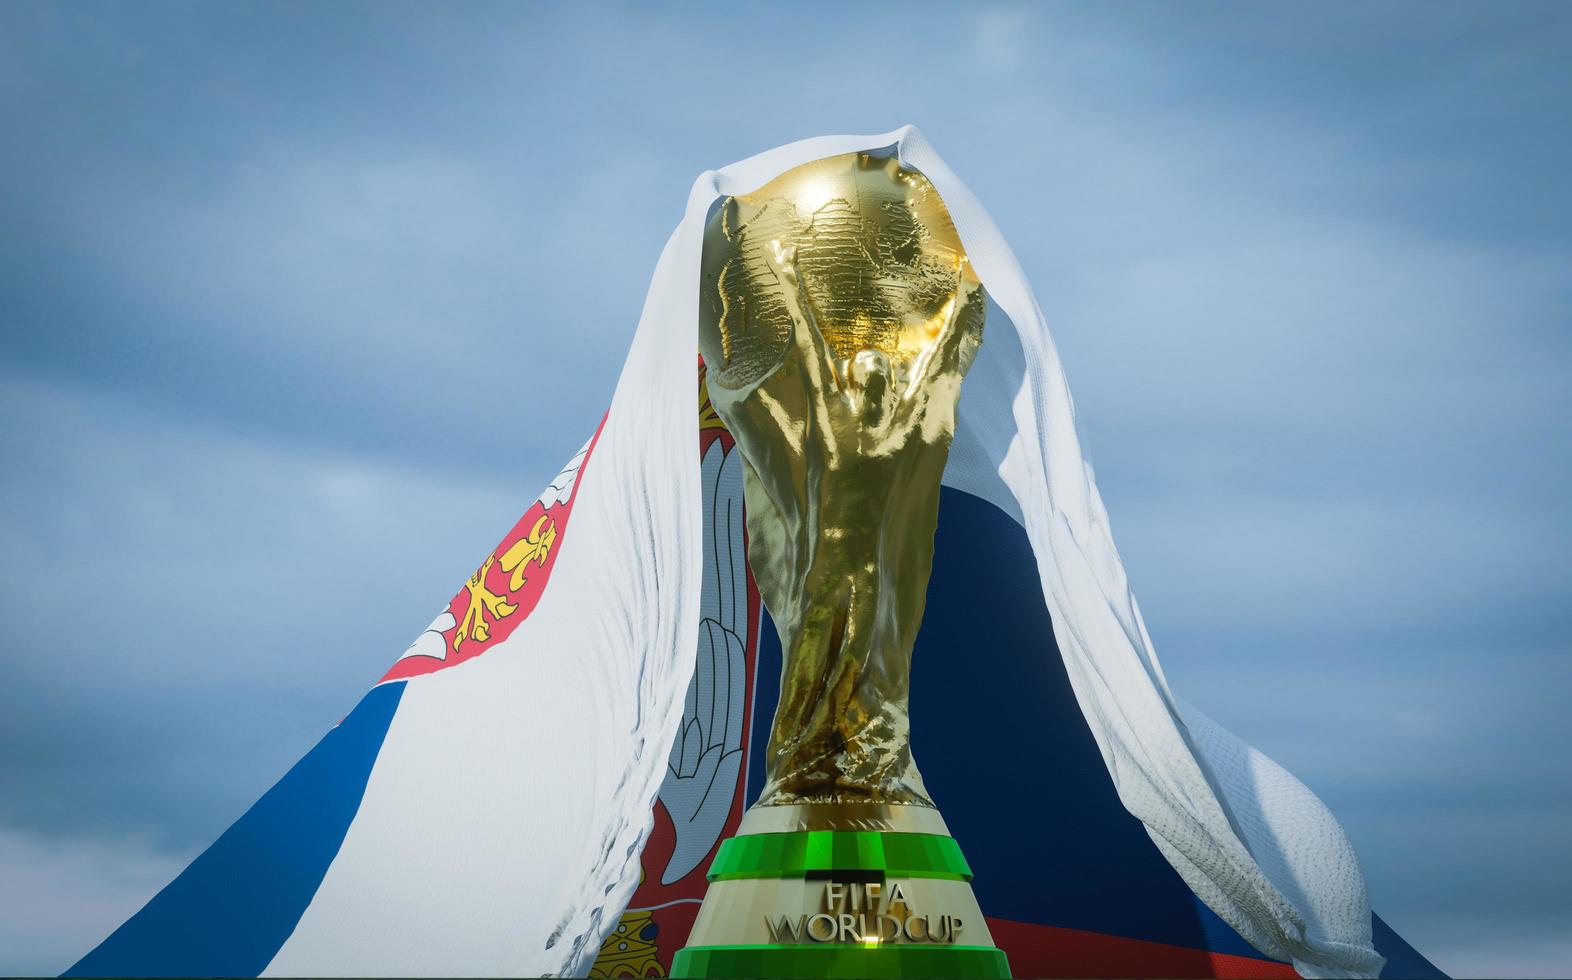 serbia copa mundial de la fifa con bandera serbia, ganador de la copa mundial de fútbol qatar 2022, trabajo 3d e imagen 3d, yerevan, armenia - 2022 oct 04 foto